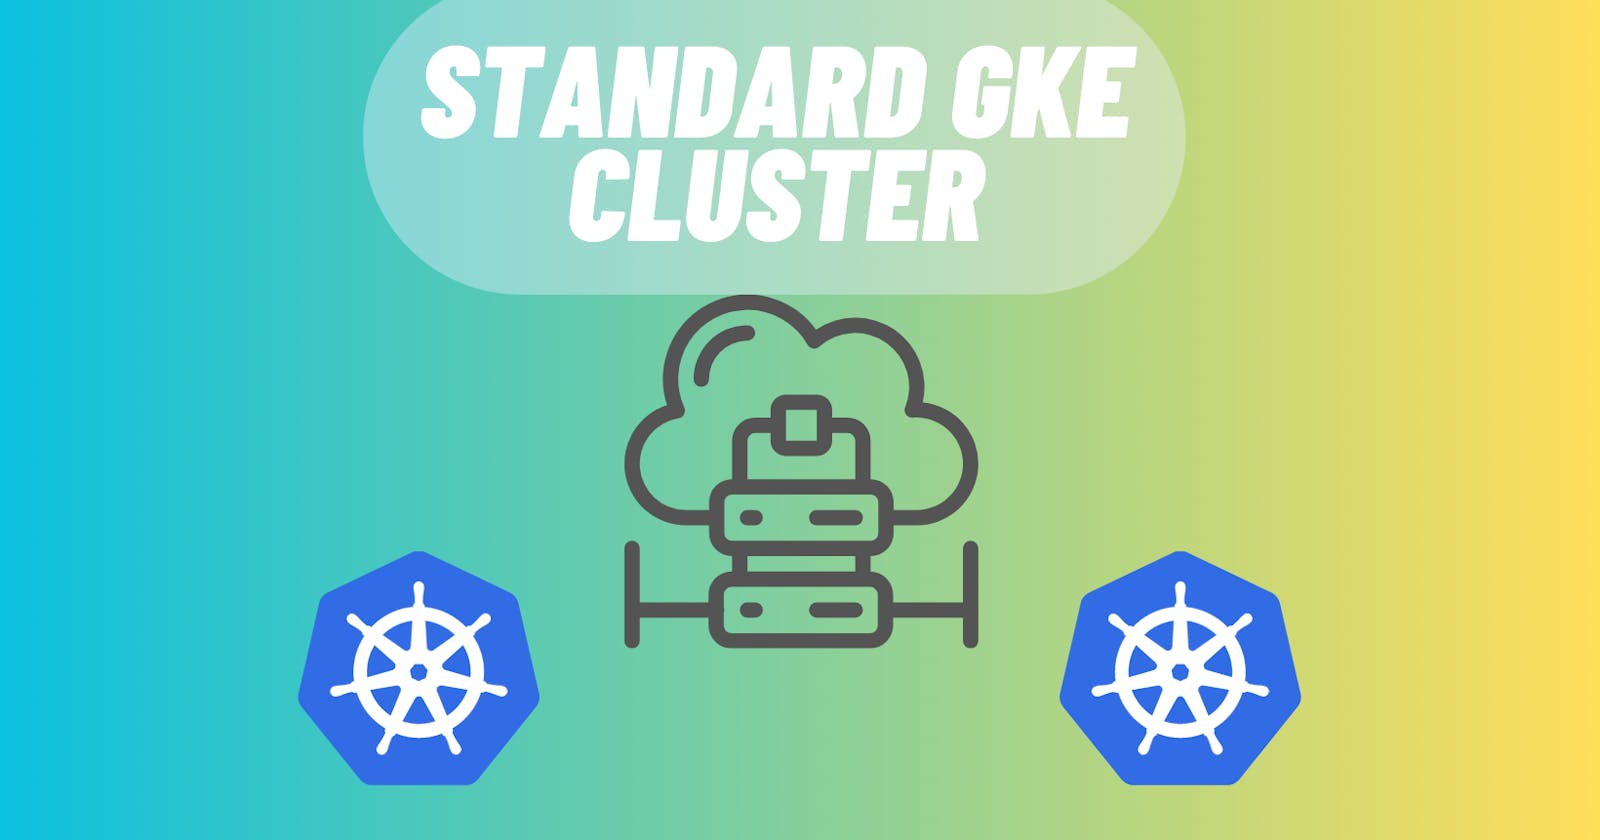 Create a Standard GKE Cluster